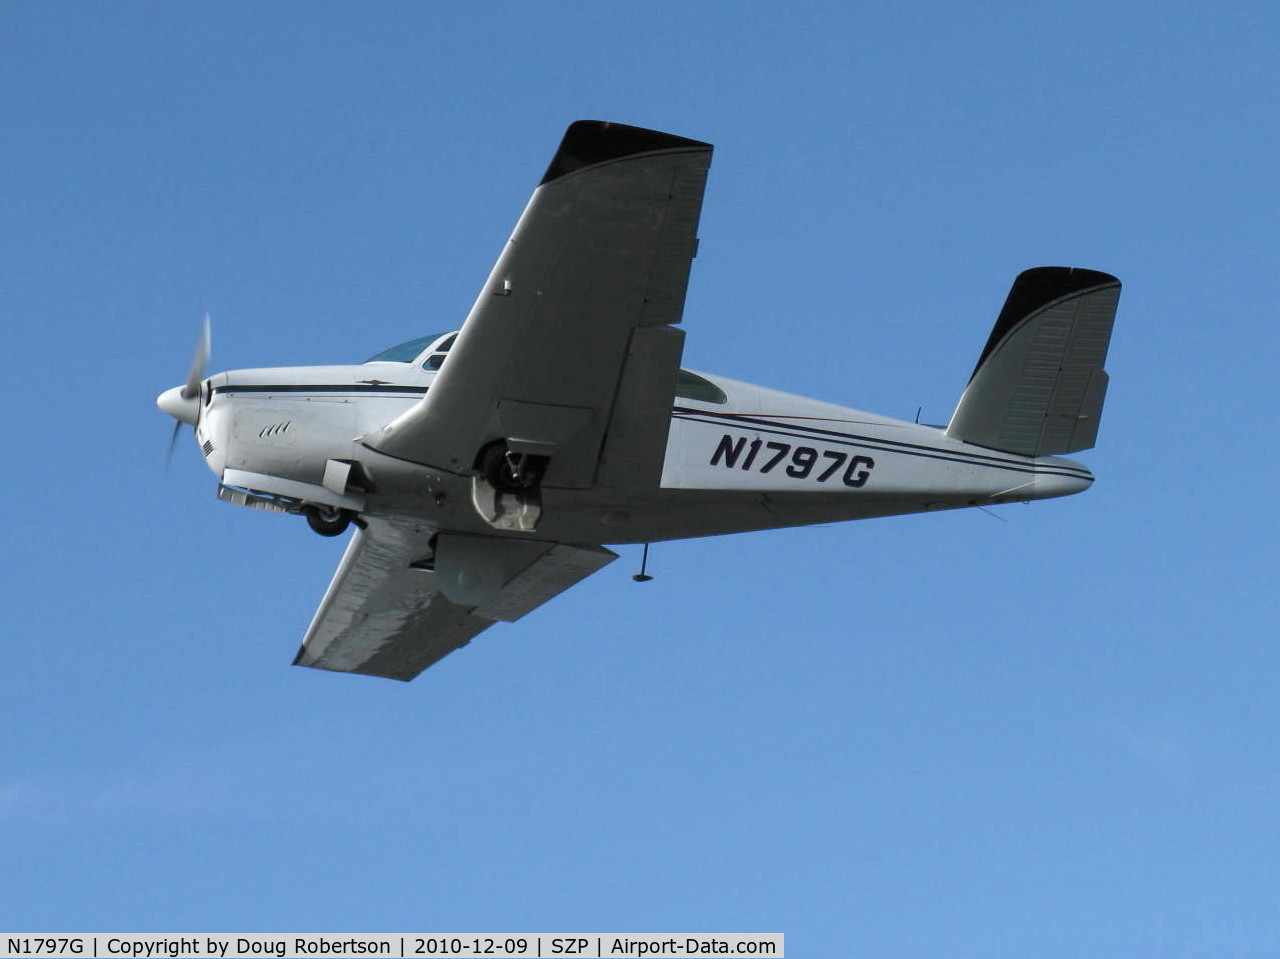 N1797G, 1962 Beech P35 Bonanza C/N D-6975, 1962 Beech P35 BONANZA, Continental IO-470-N 260 Hp, takeoff climb Rwy 22, gear coming up